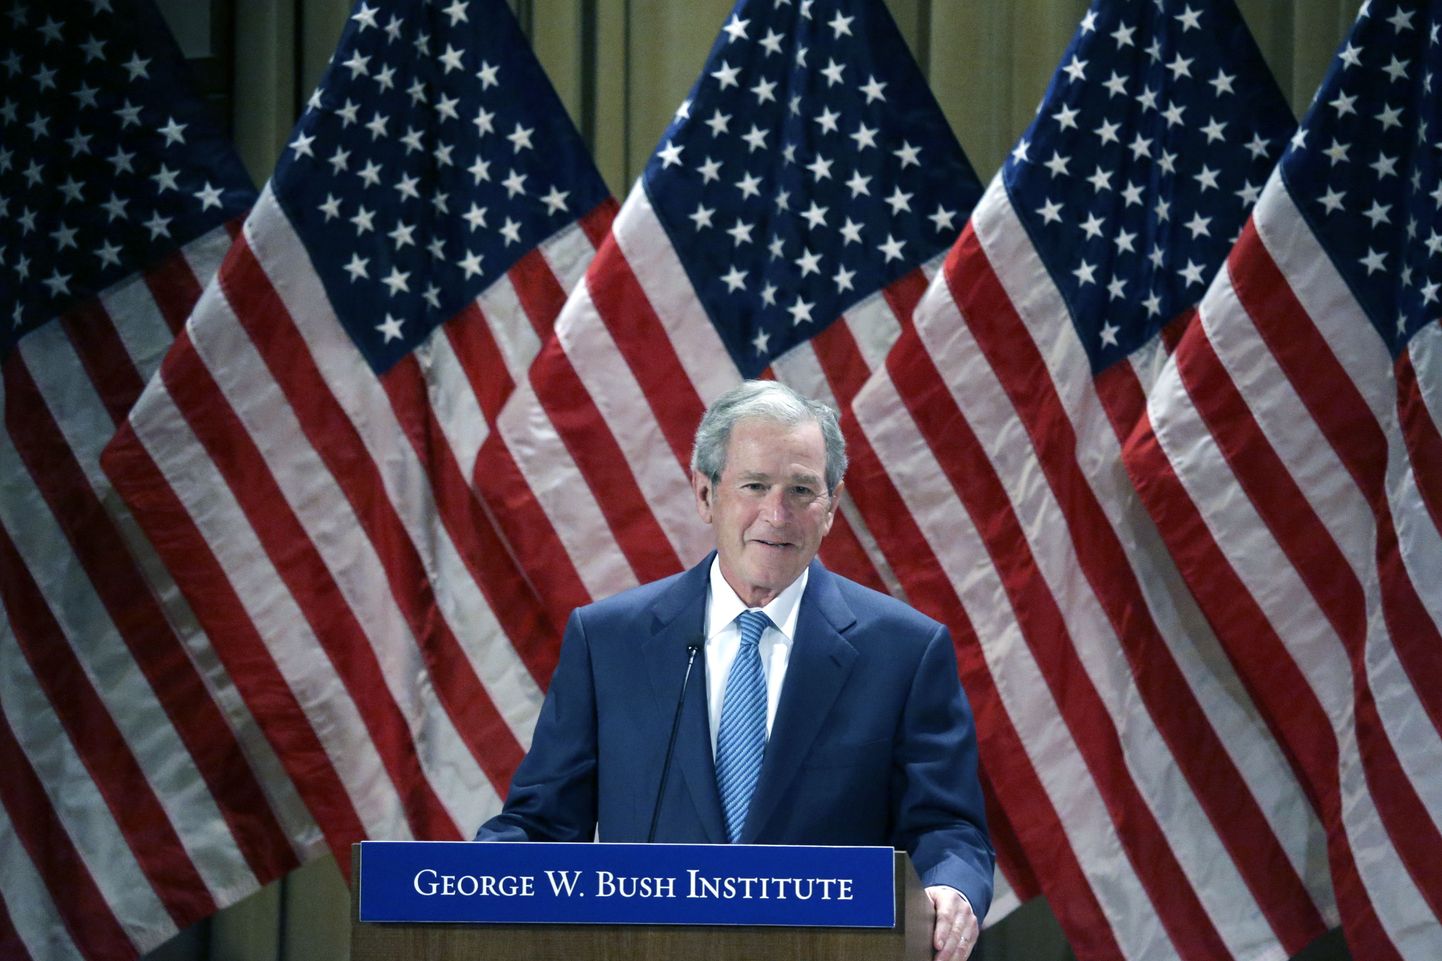 Endine USA president George W. Bush veebruaris 2014 Dallases esinemas.